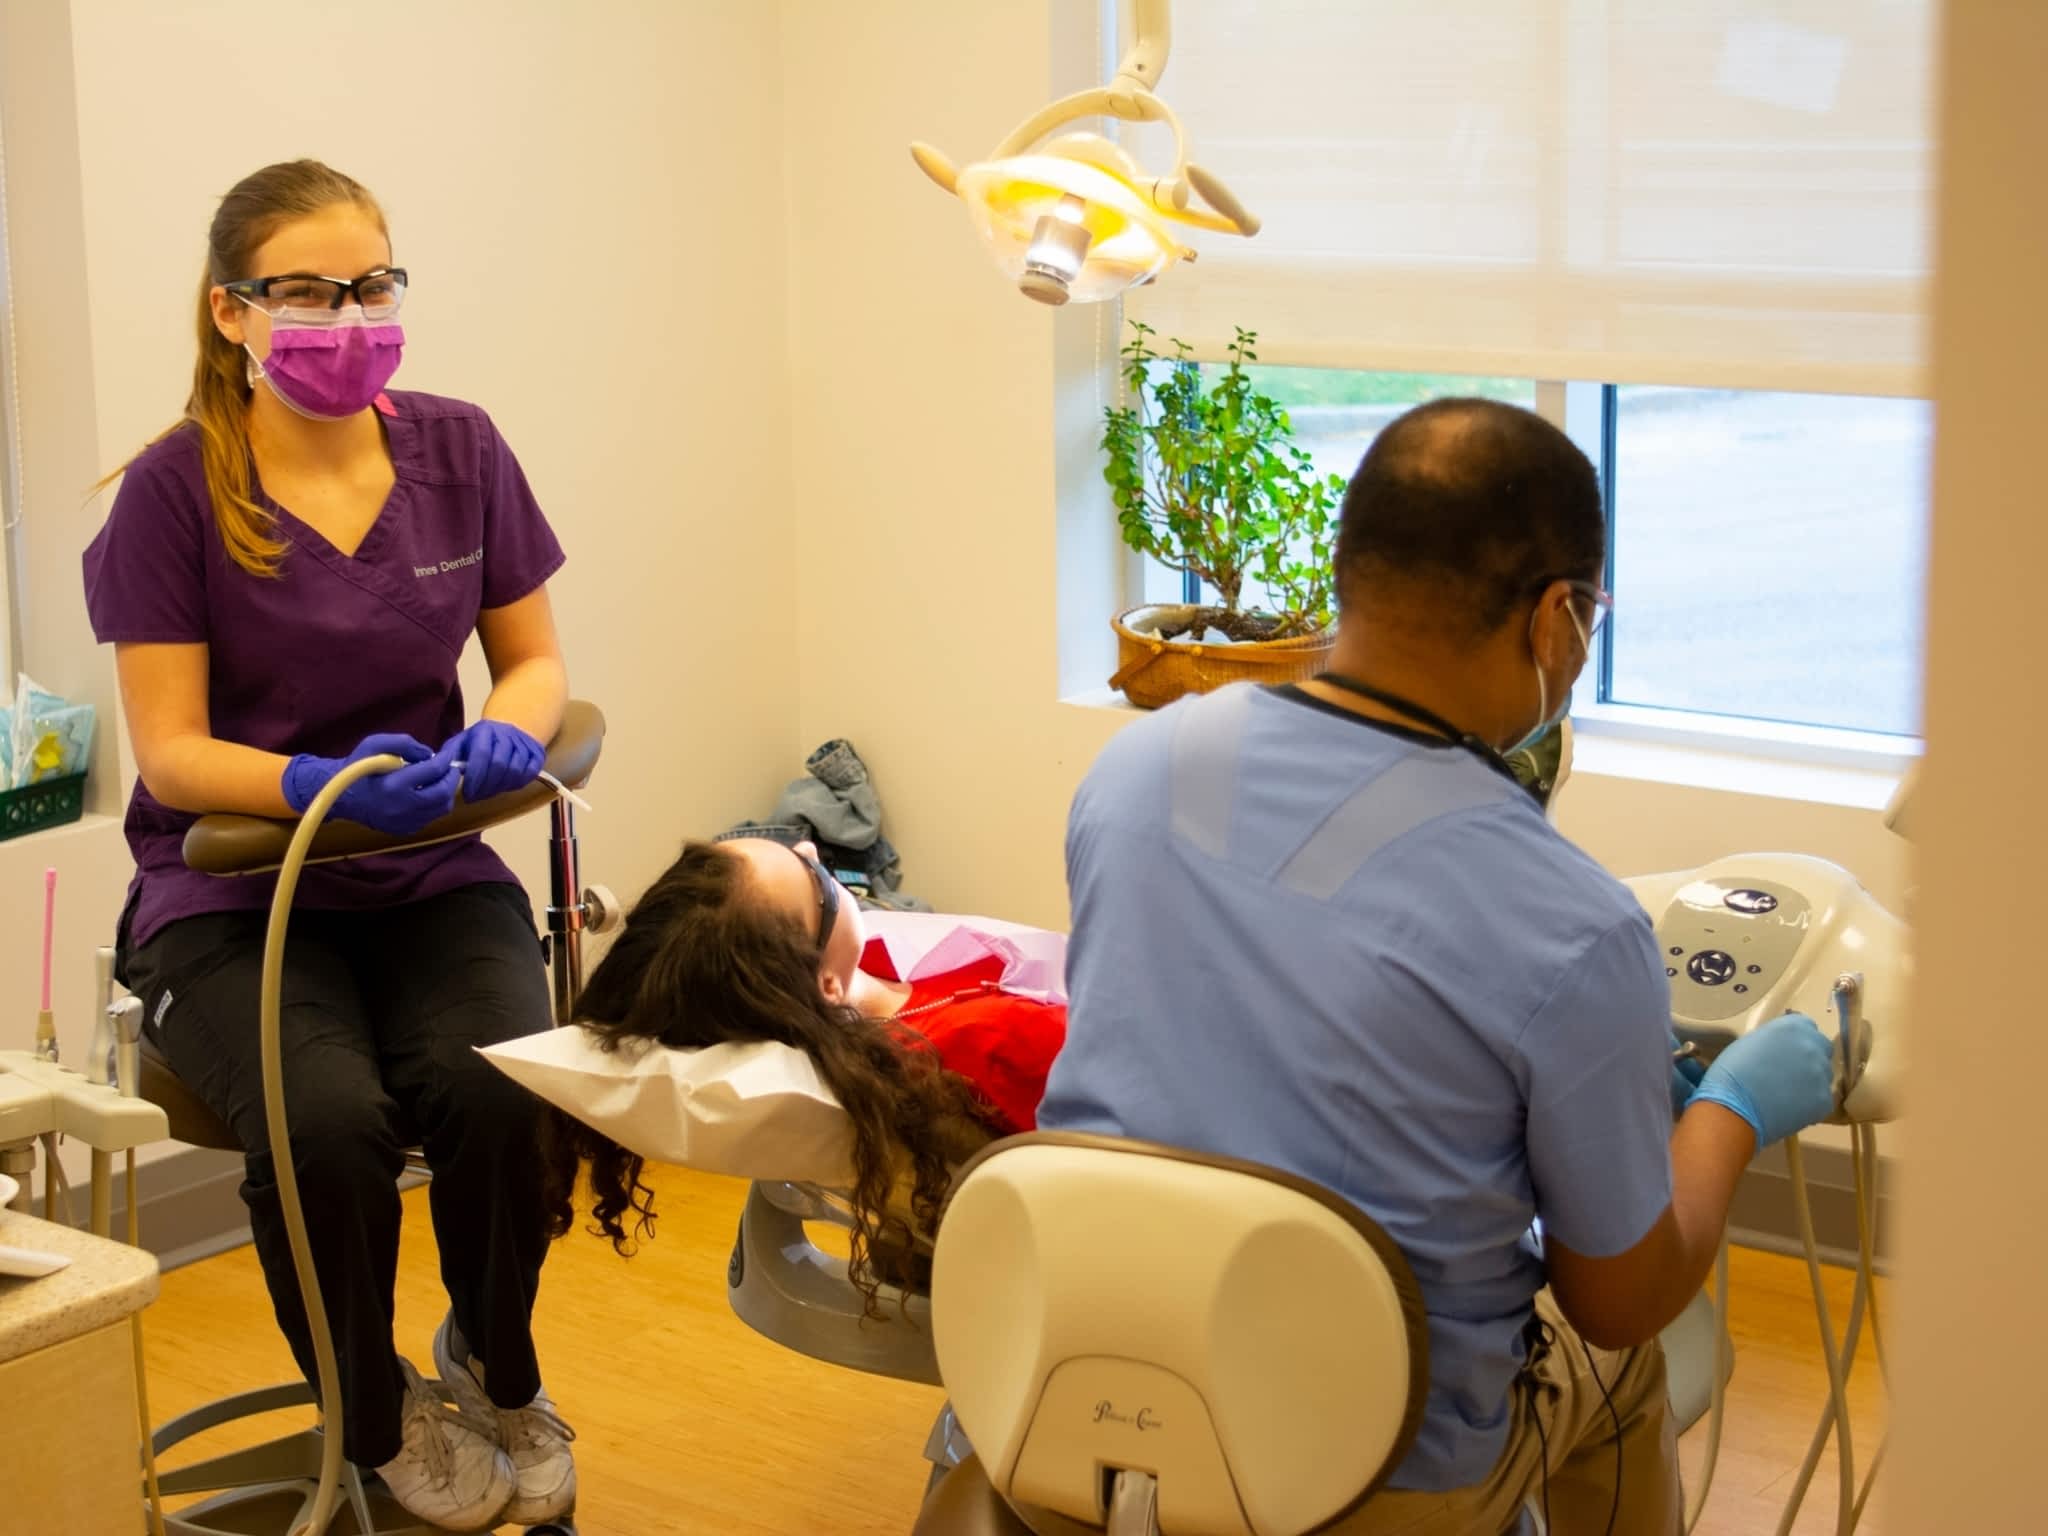 photo Innes Dental Clinic